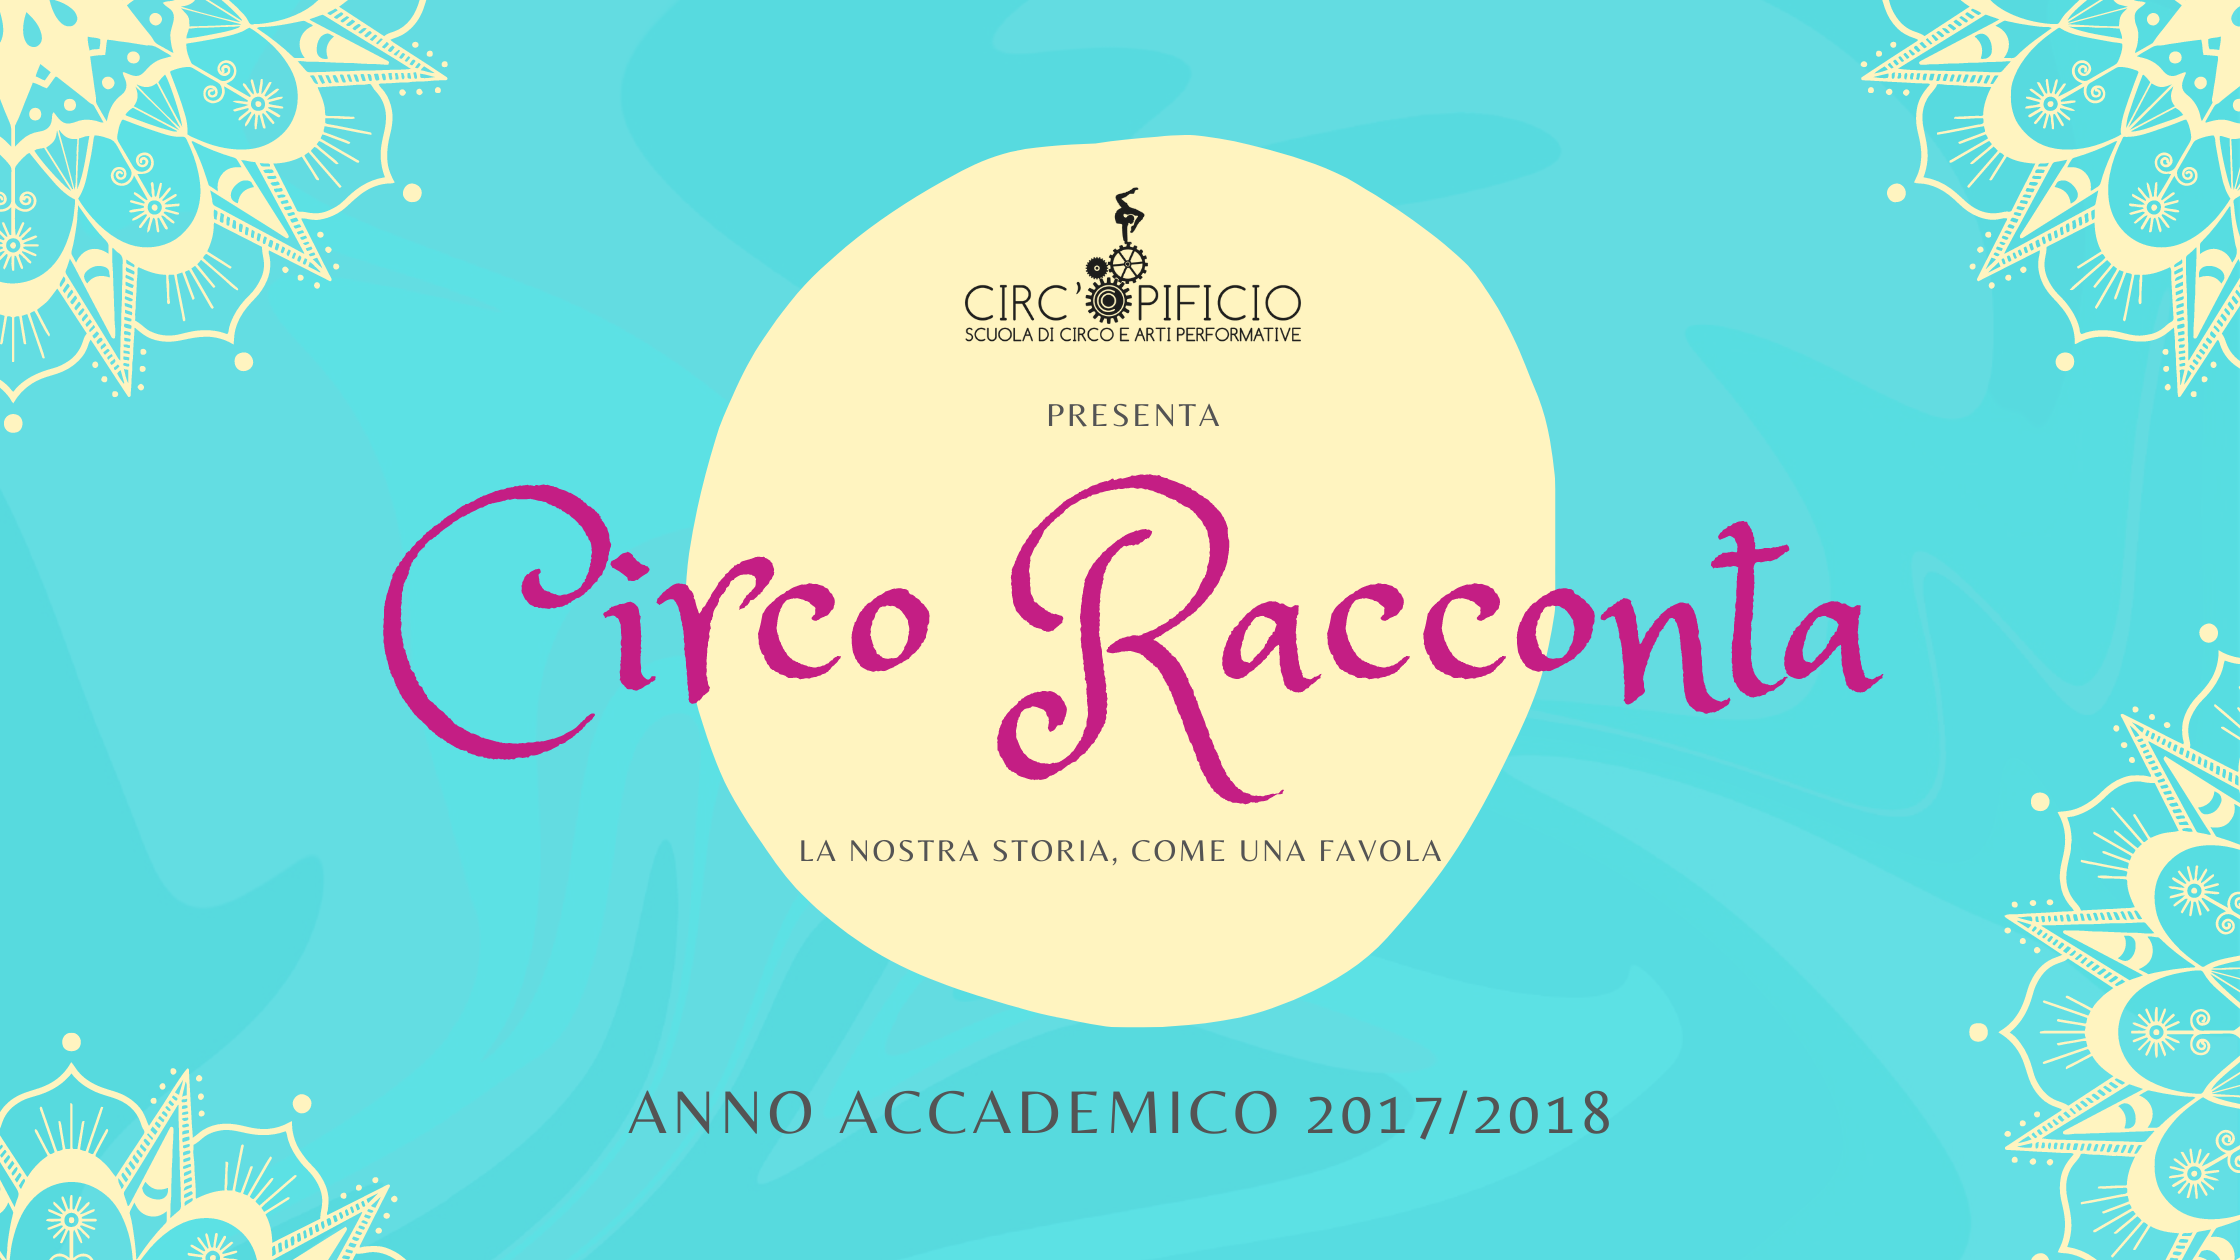 https://www.circopificio.it/wp-content/uploads/2020/12/Circo-Racconta.png